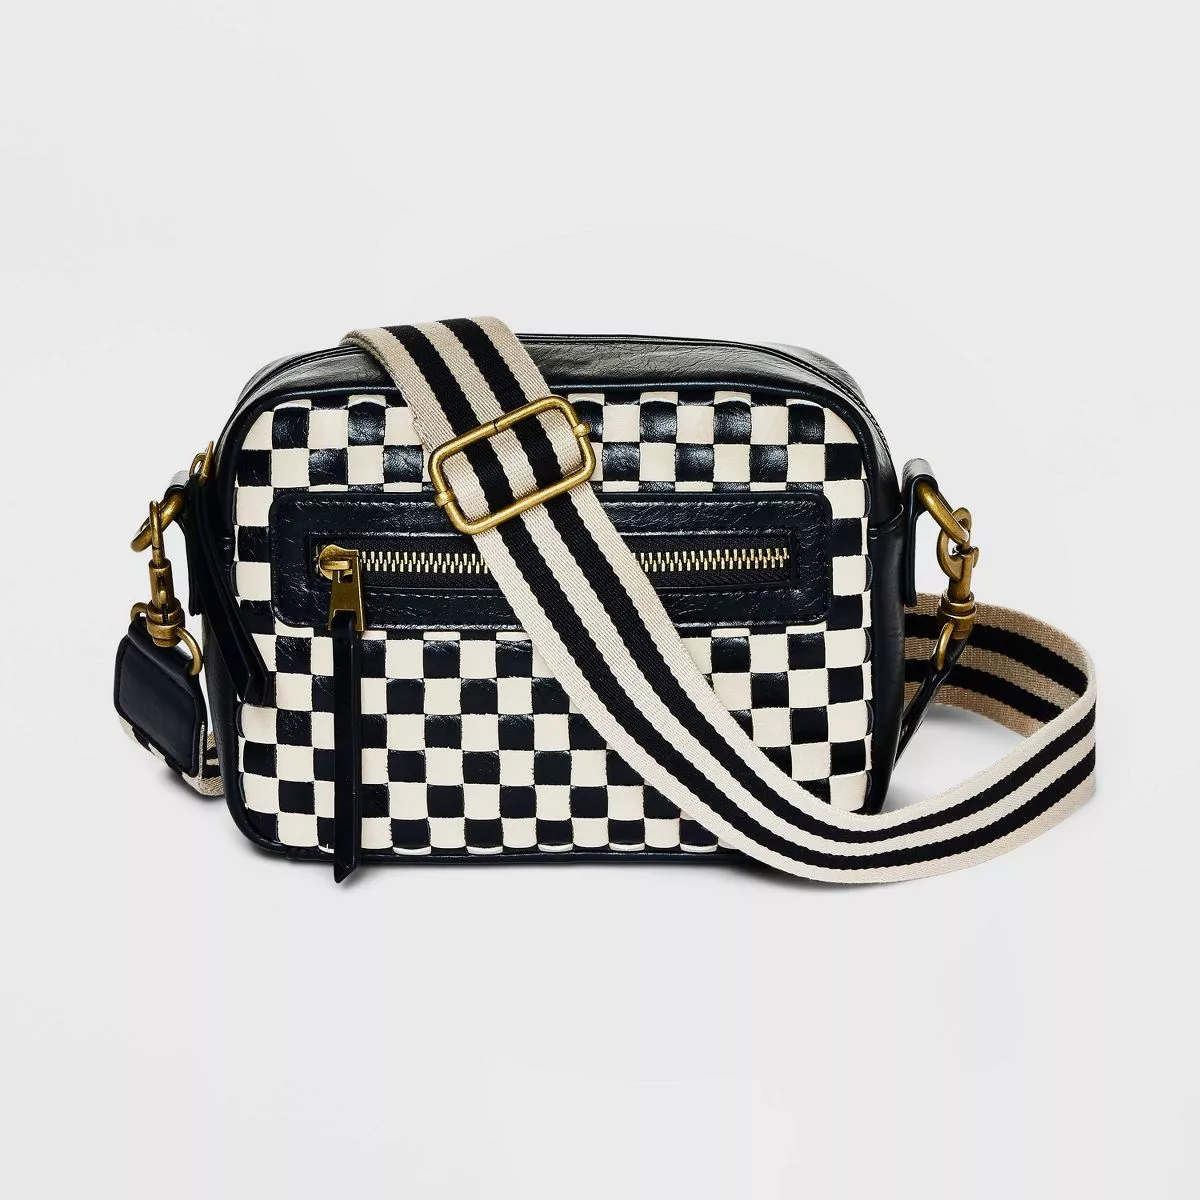 Genuine leather woman bag handbag … curated on LTK